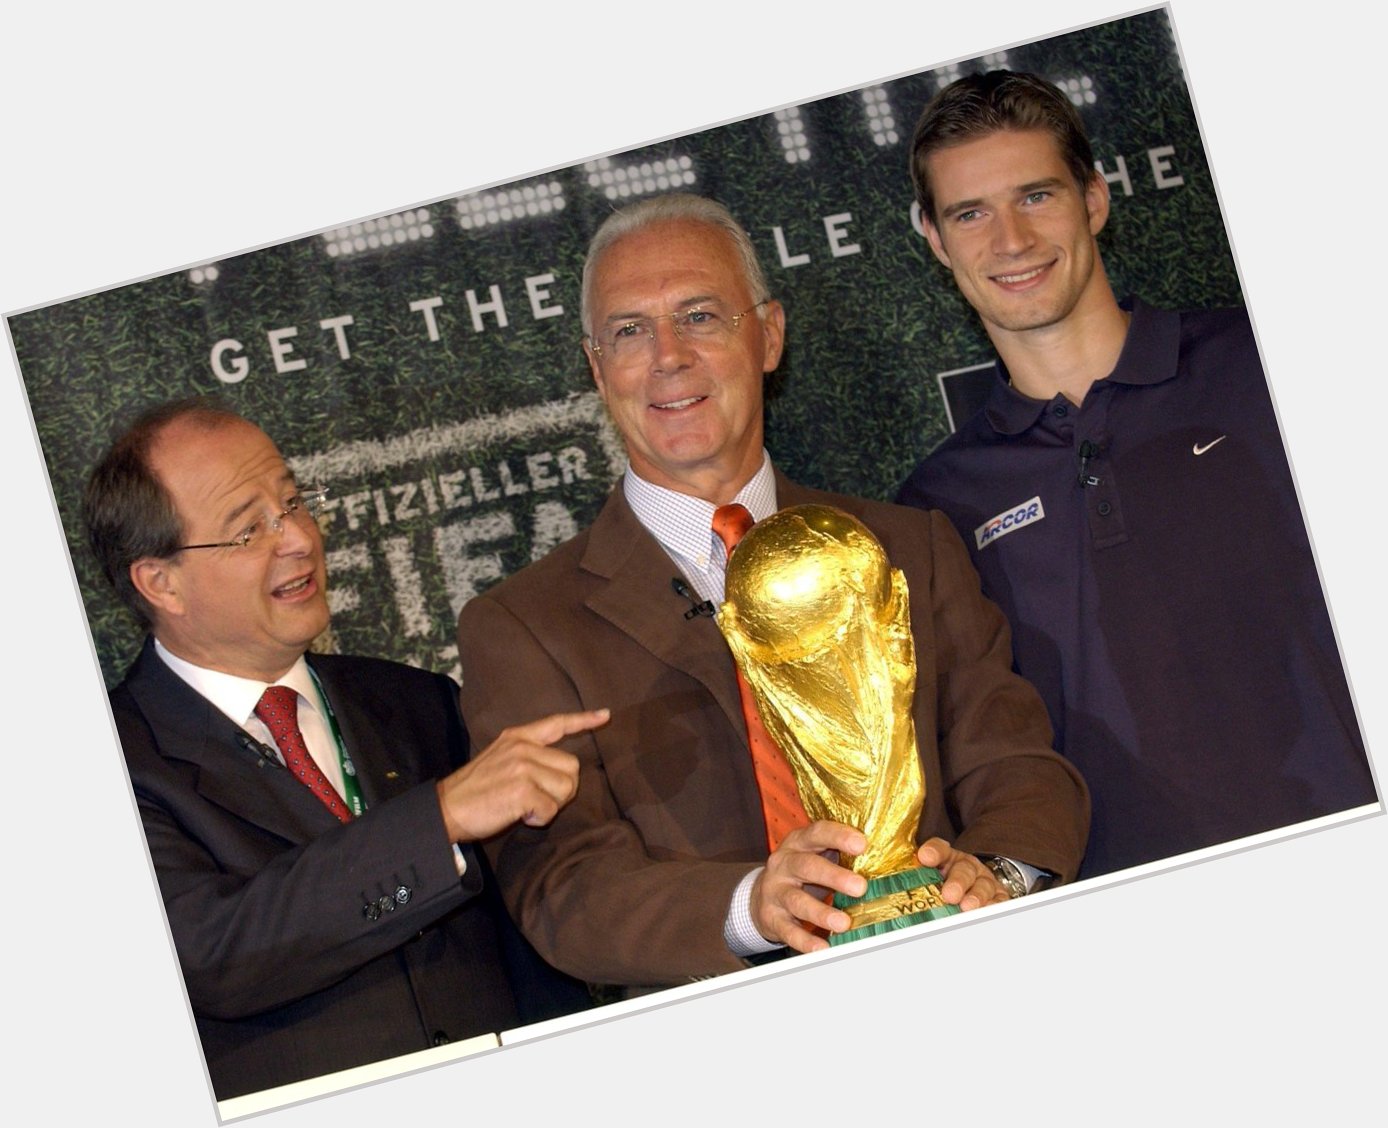  - World Cups: 1

- Champion Leagues: 3

- Bundesligas: 4

Happy Birthday to the legendary Franz Beckenbauer 